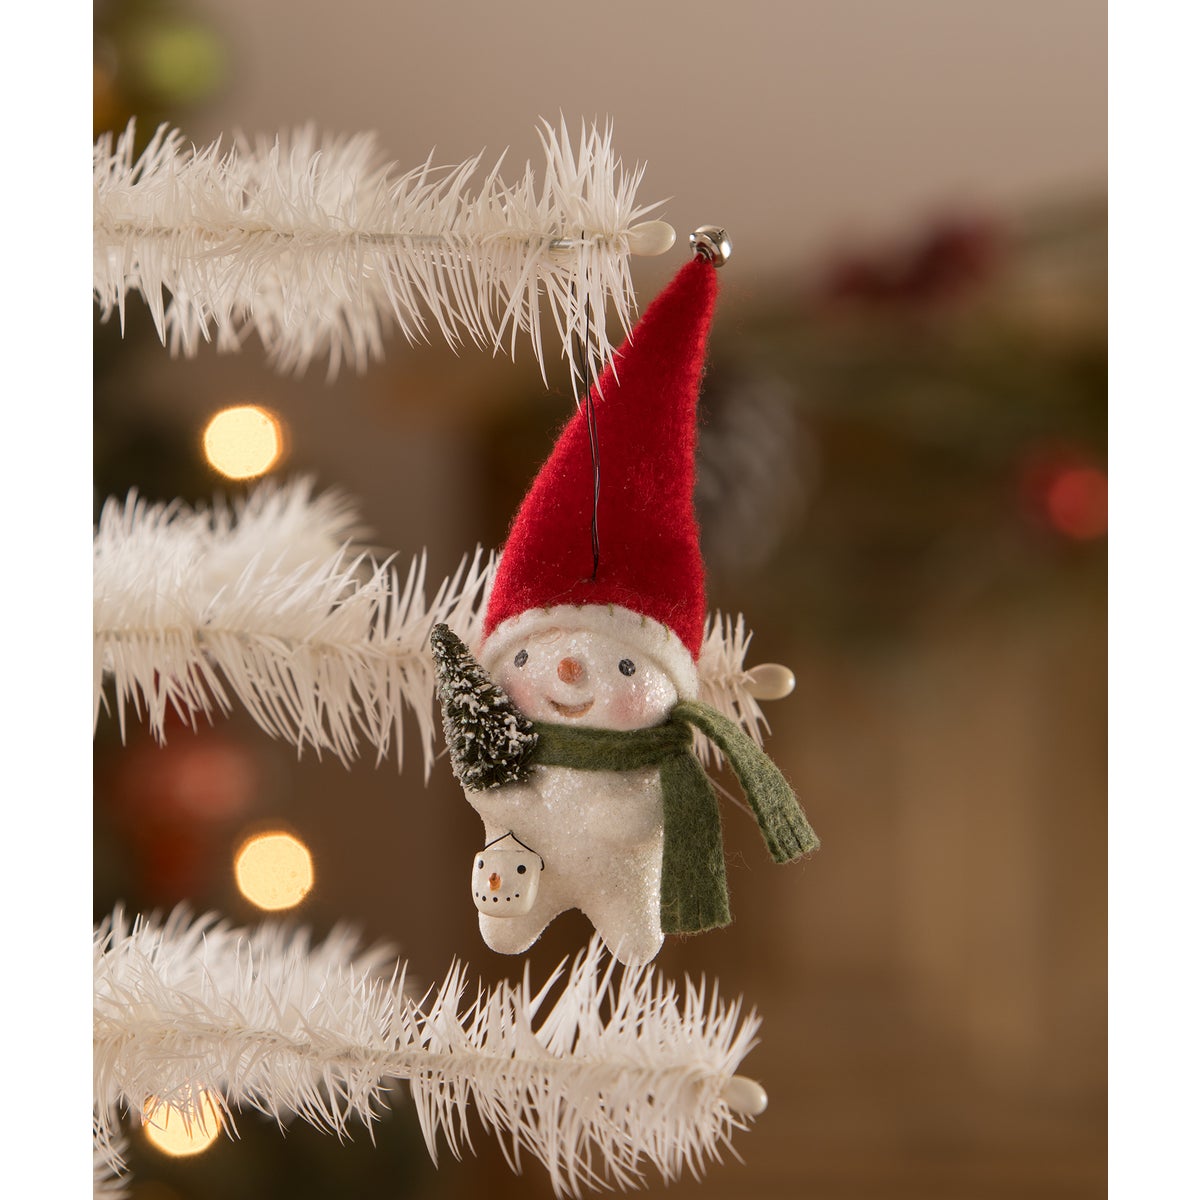 Stocking Cap Snowman Ornament